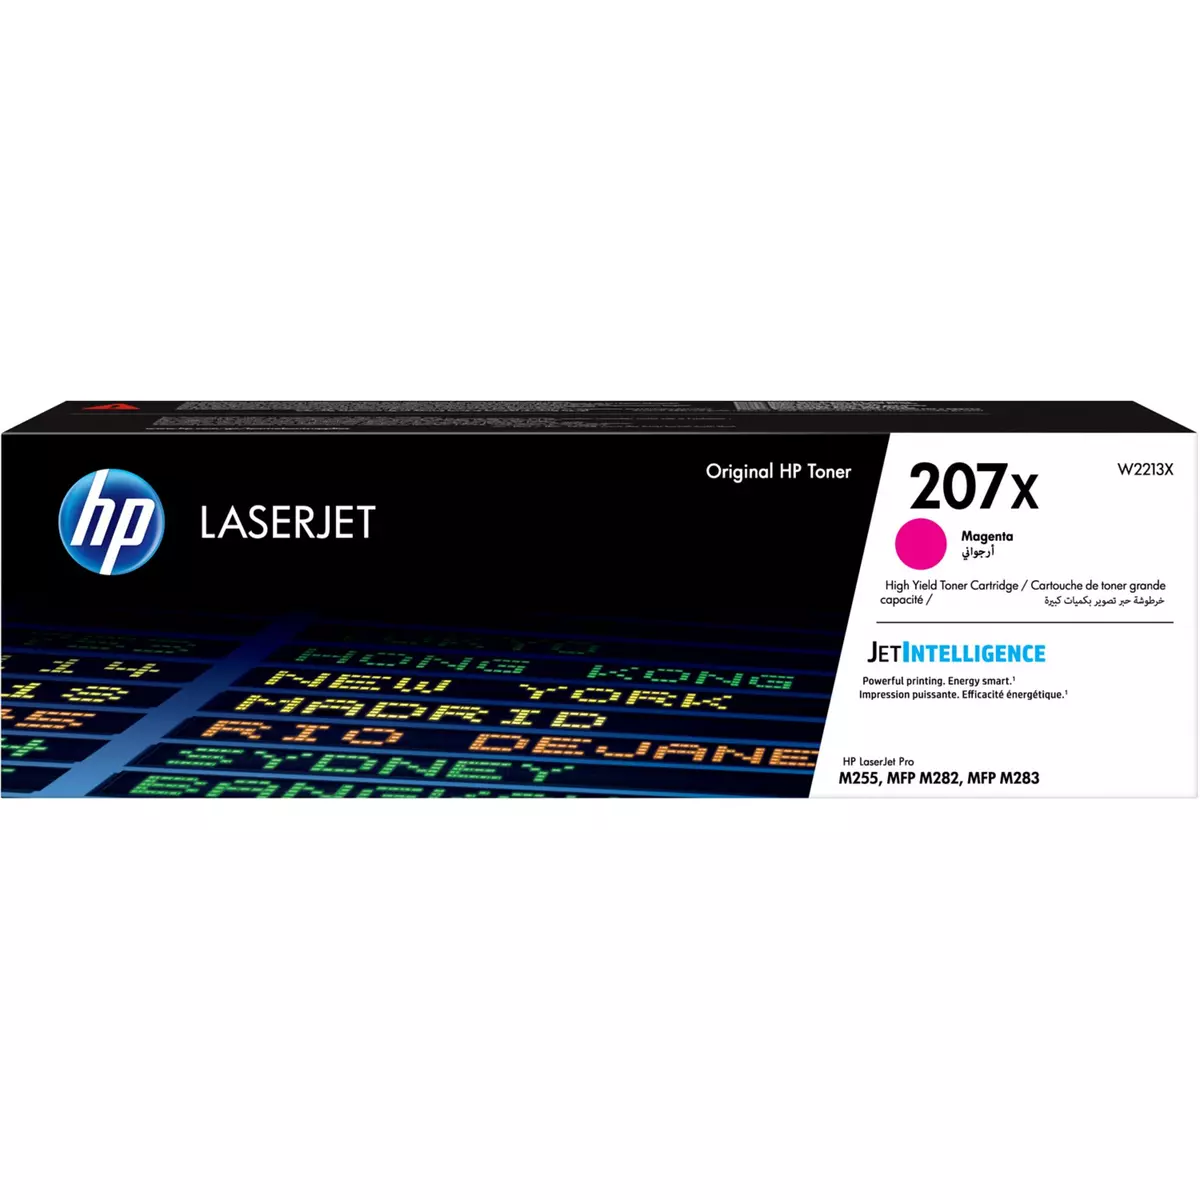 HP Cartouche imprimante TONER LASER N207X - Magenta